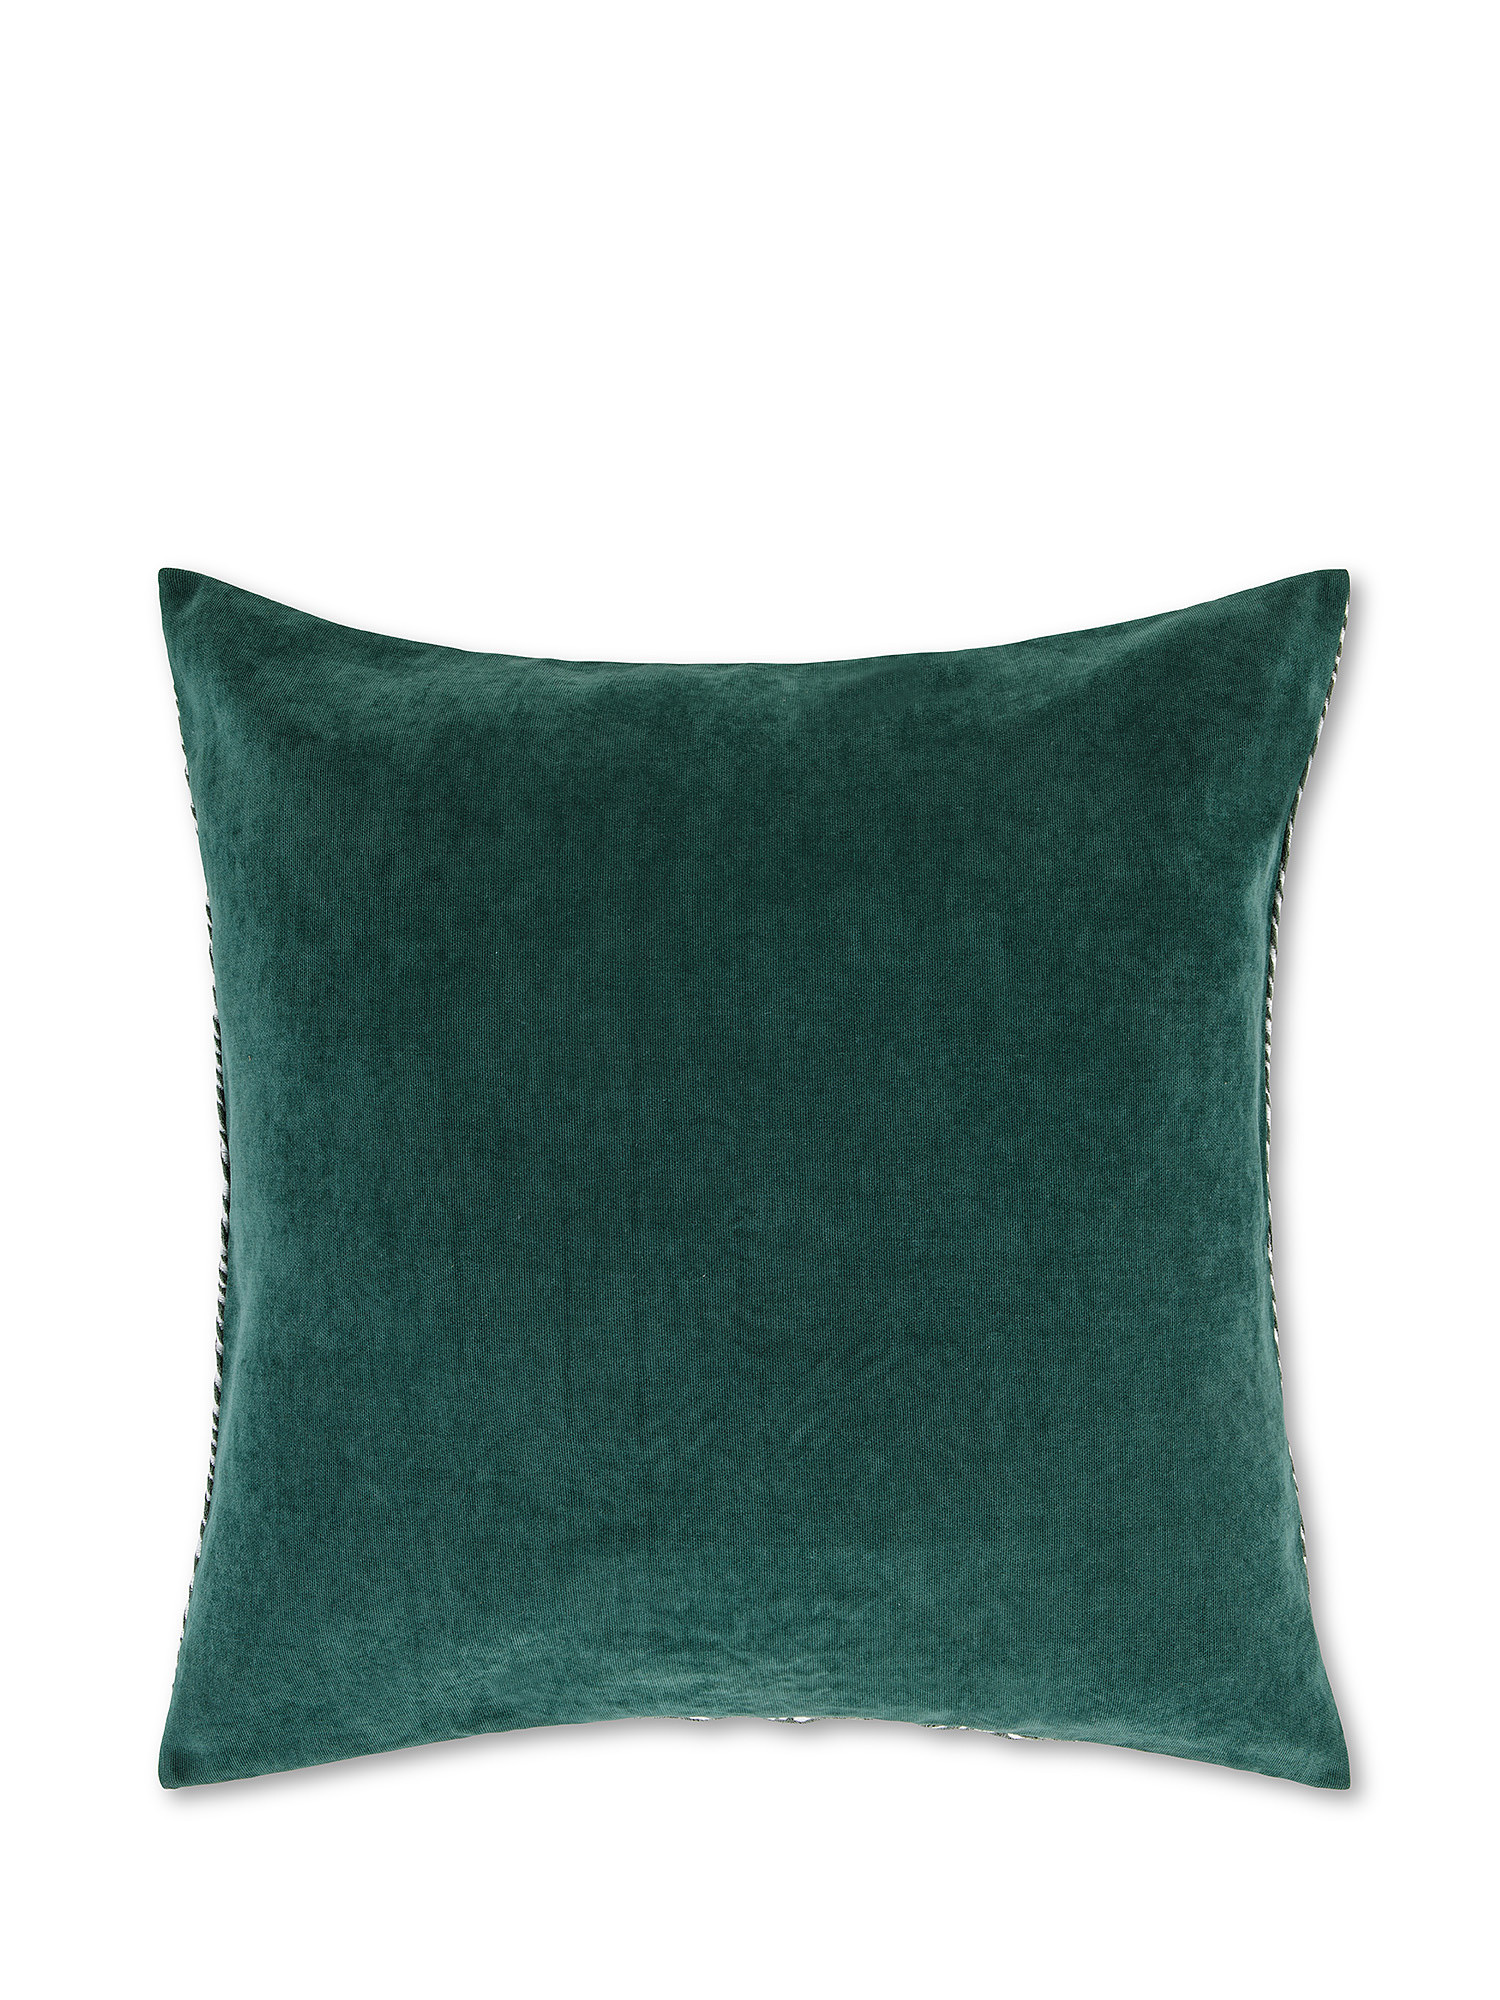 Jacquard cushion with zebra motif 50x50cm, Green, large image number 1